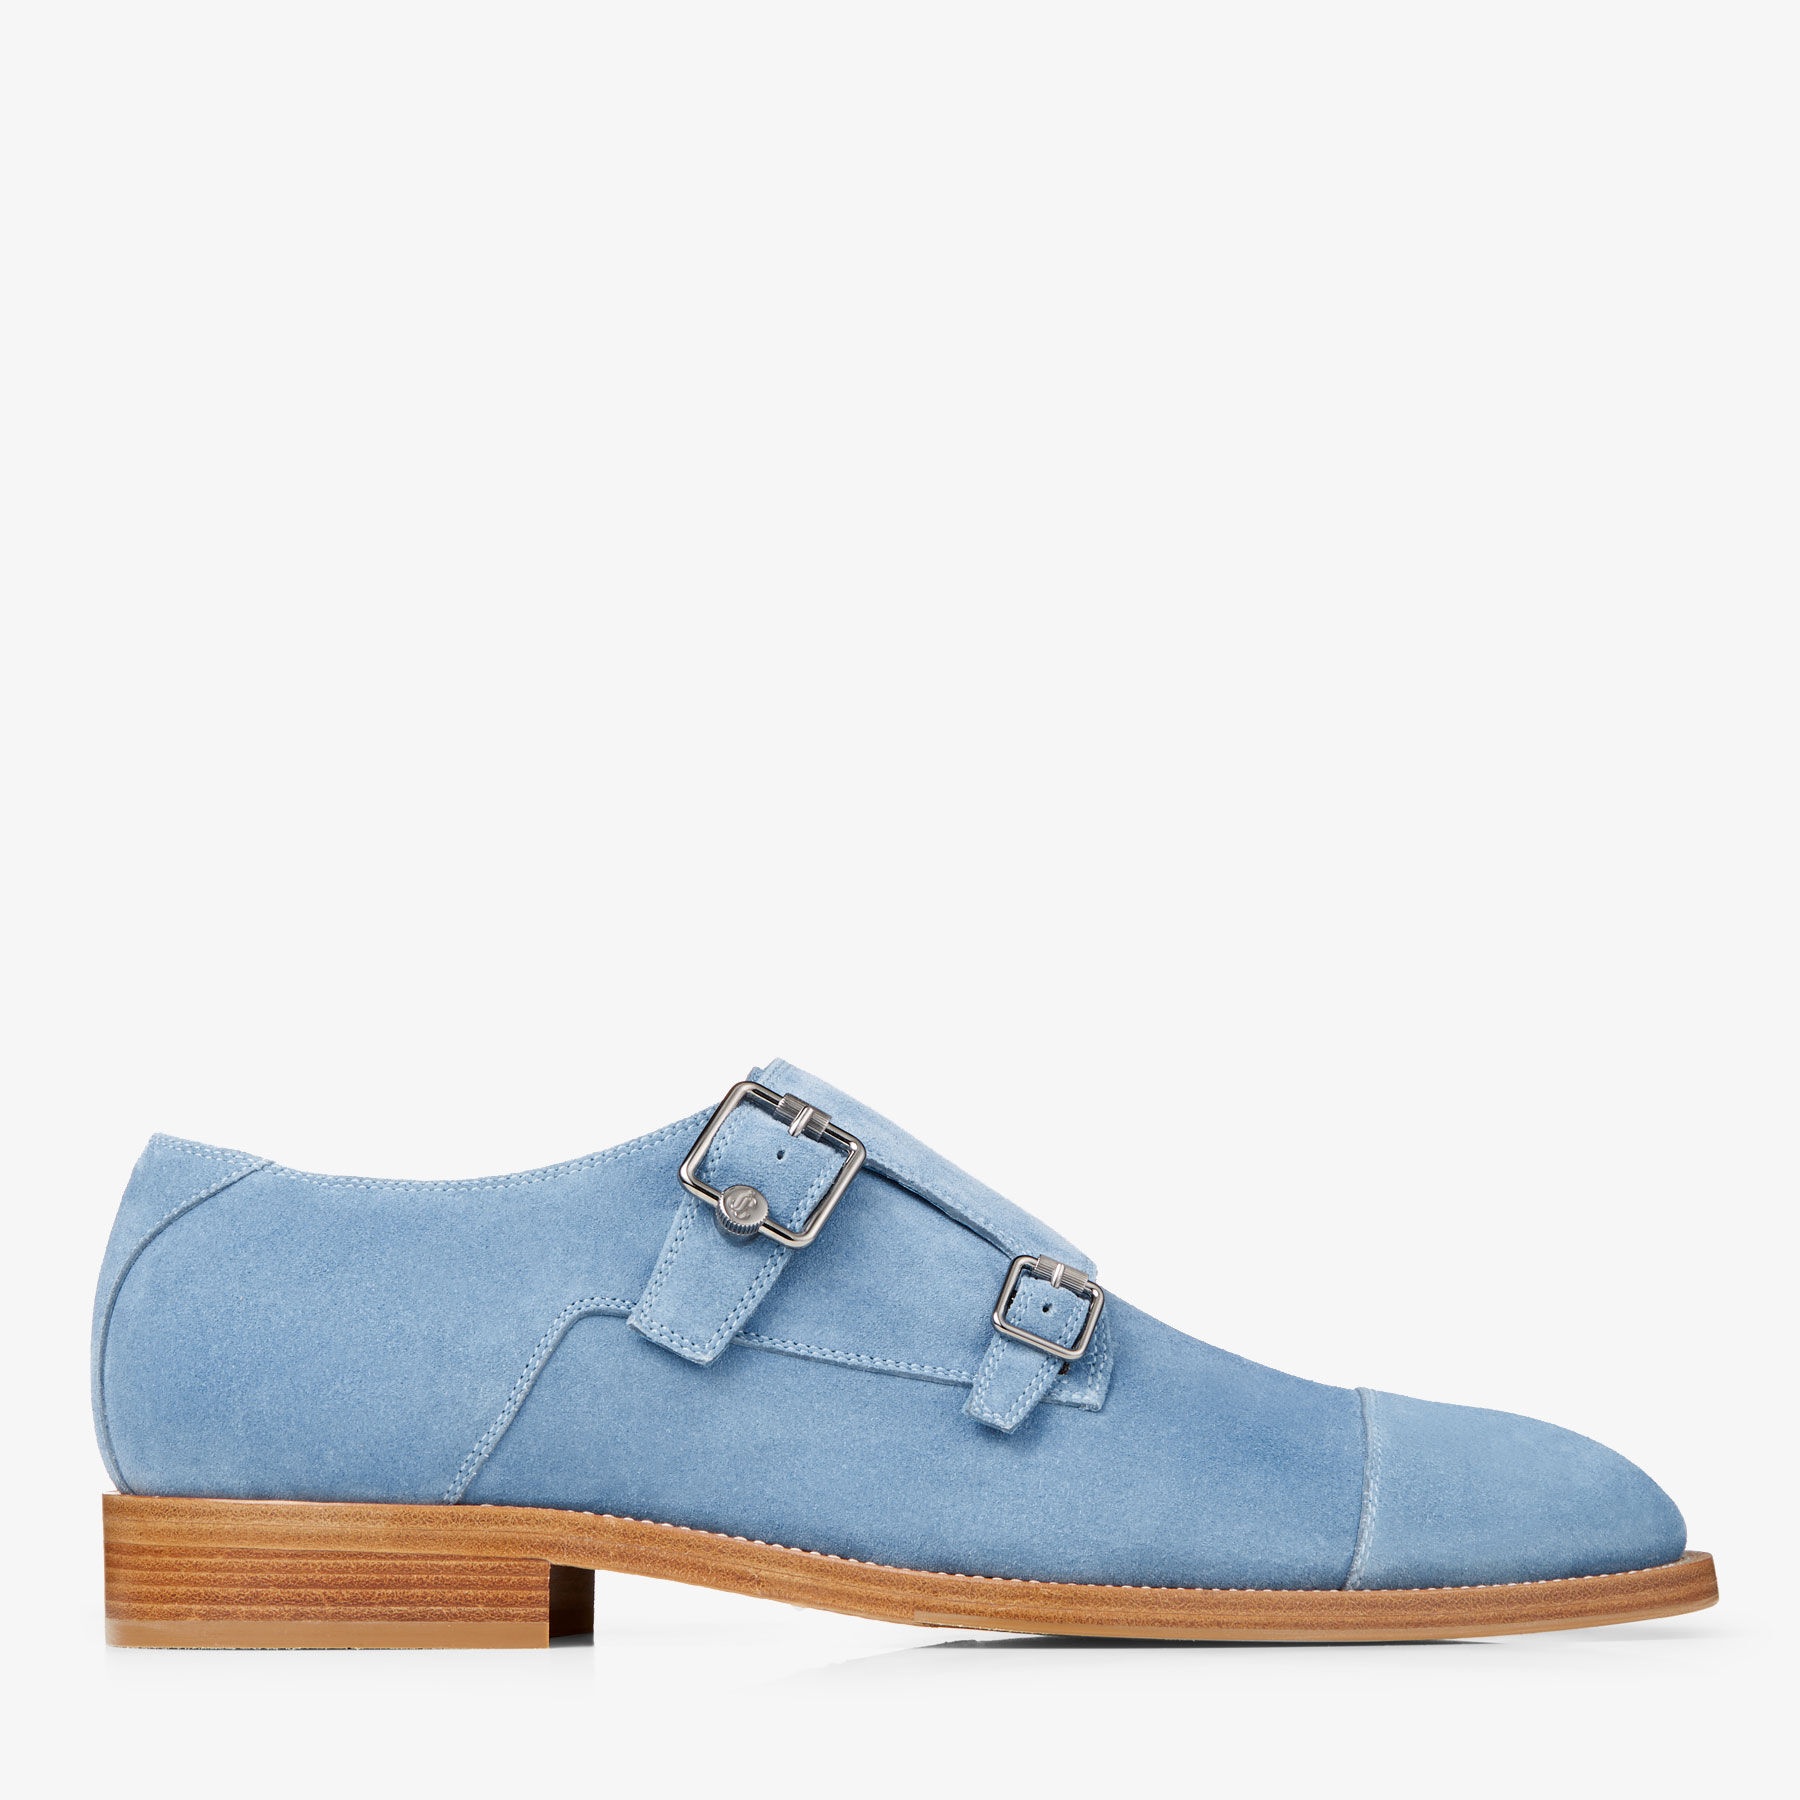 Finnion Monkstrap
Denim Velvet Suede Monk Strap Shoes - 1